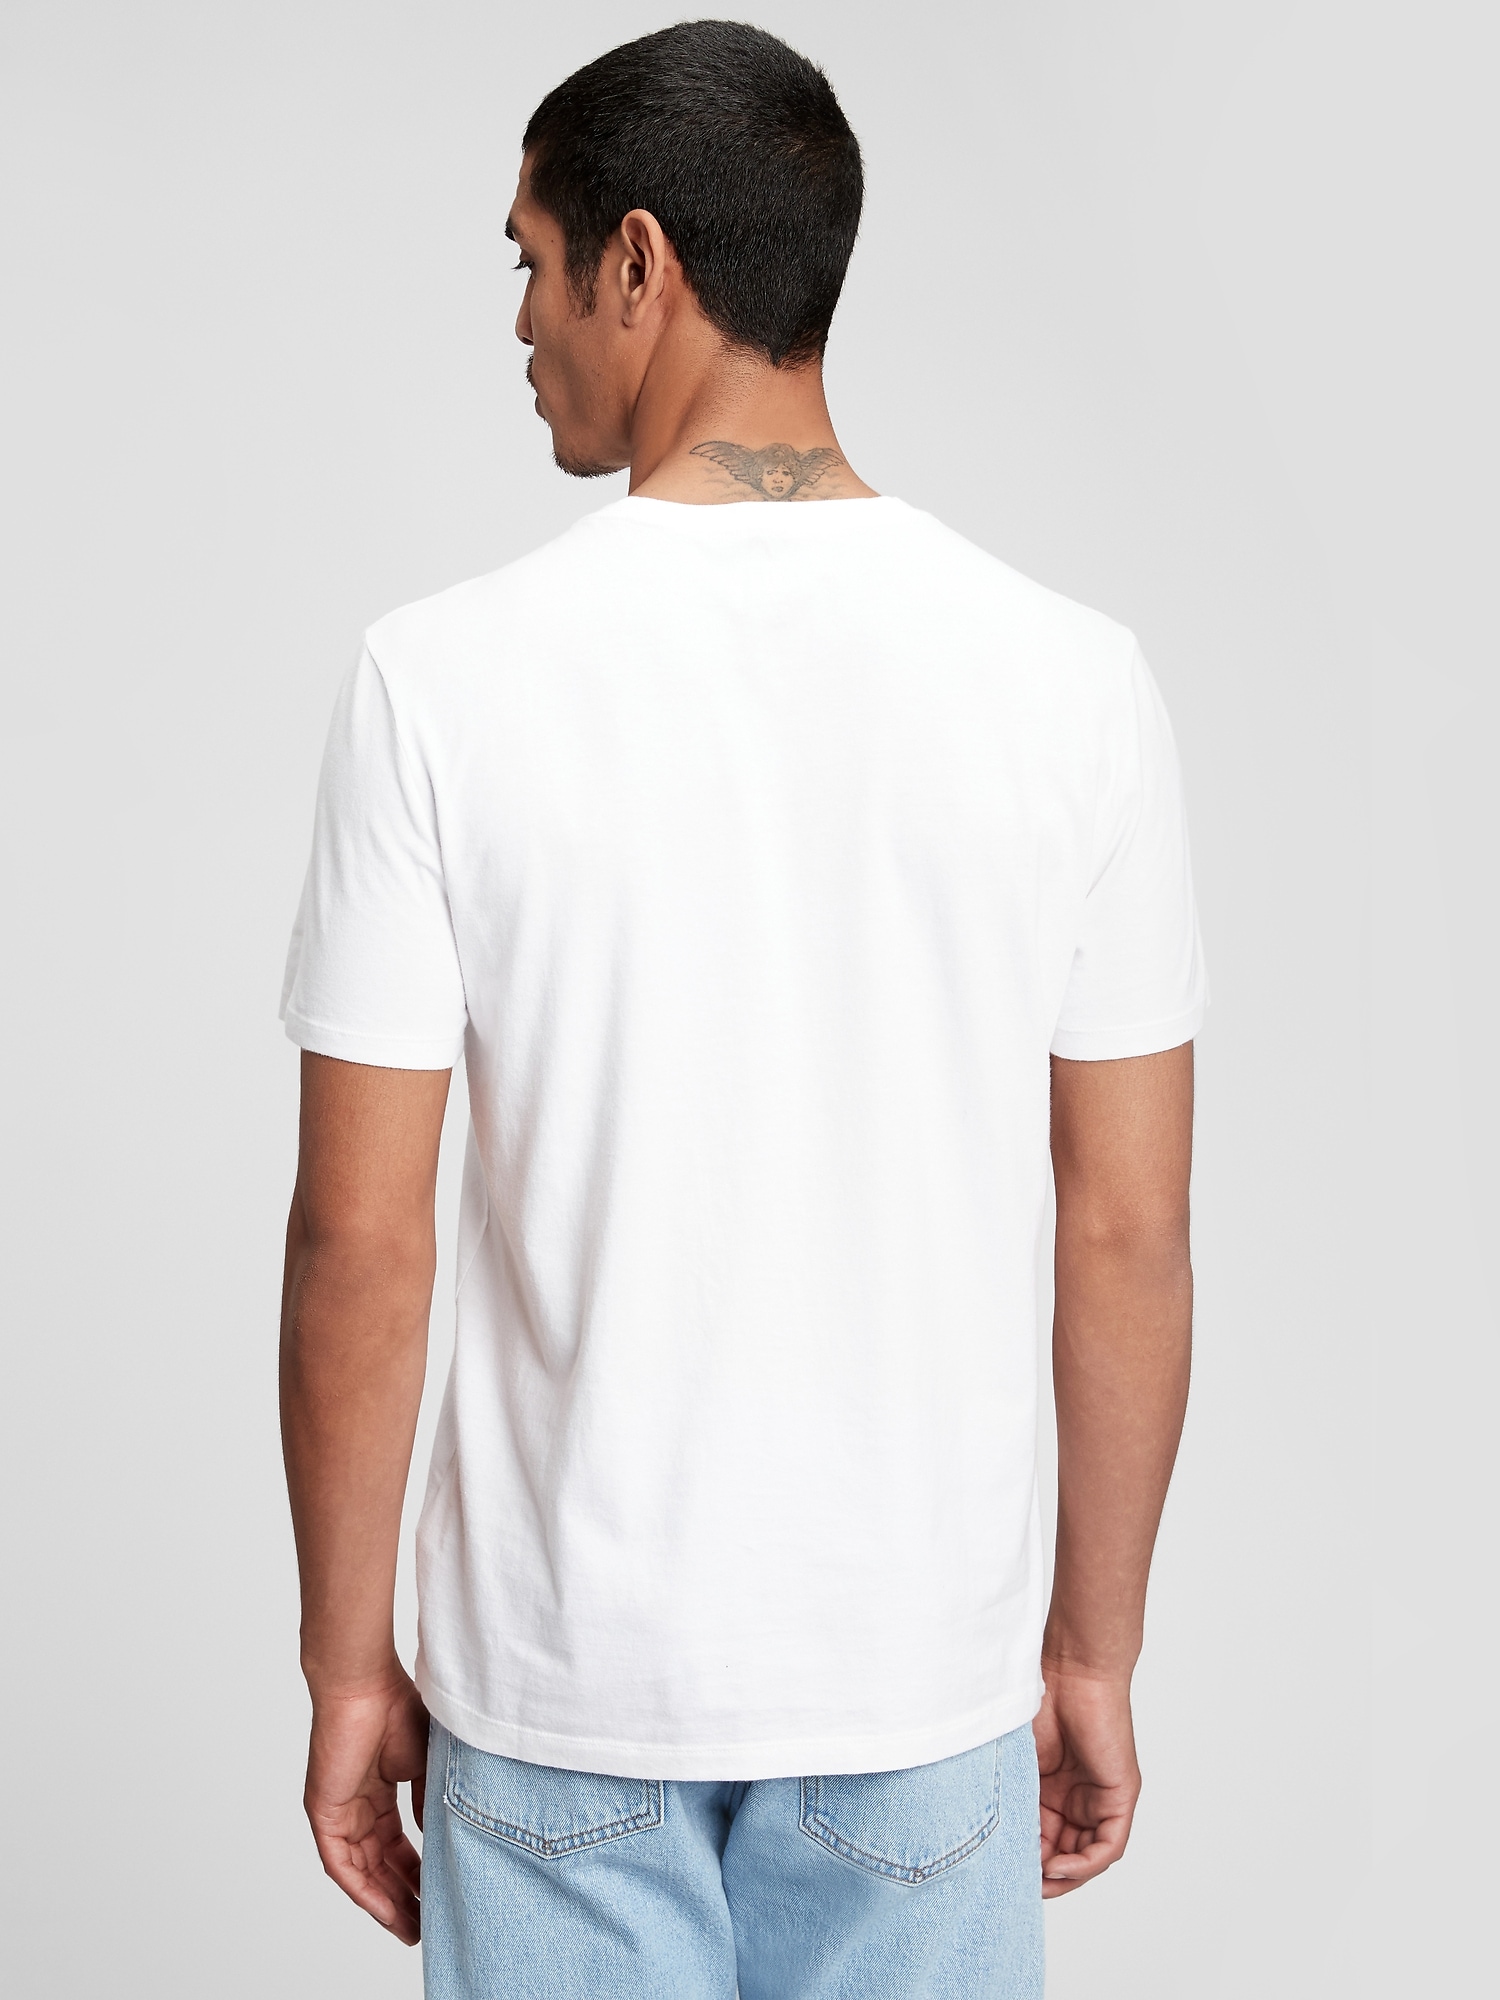 Cotton Black & White Mens 3/4th Sleeve Striped Shirt, Size: S,M,L